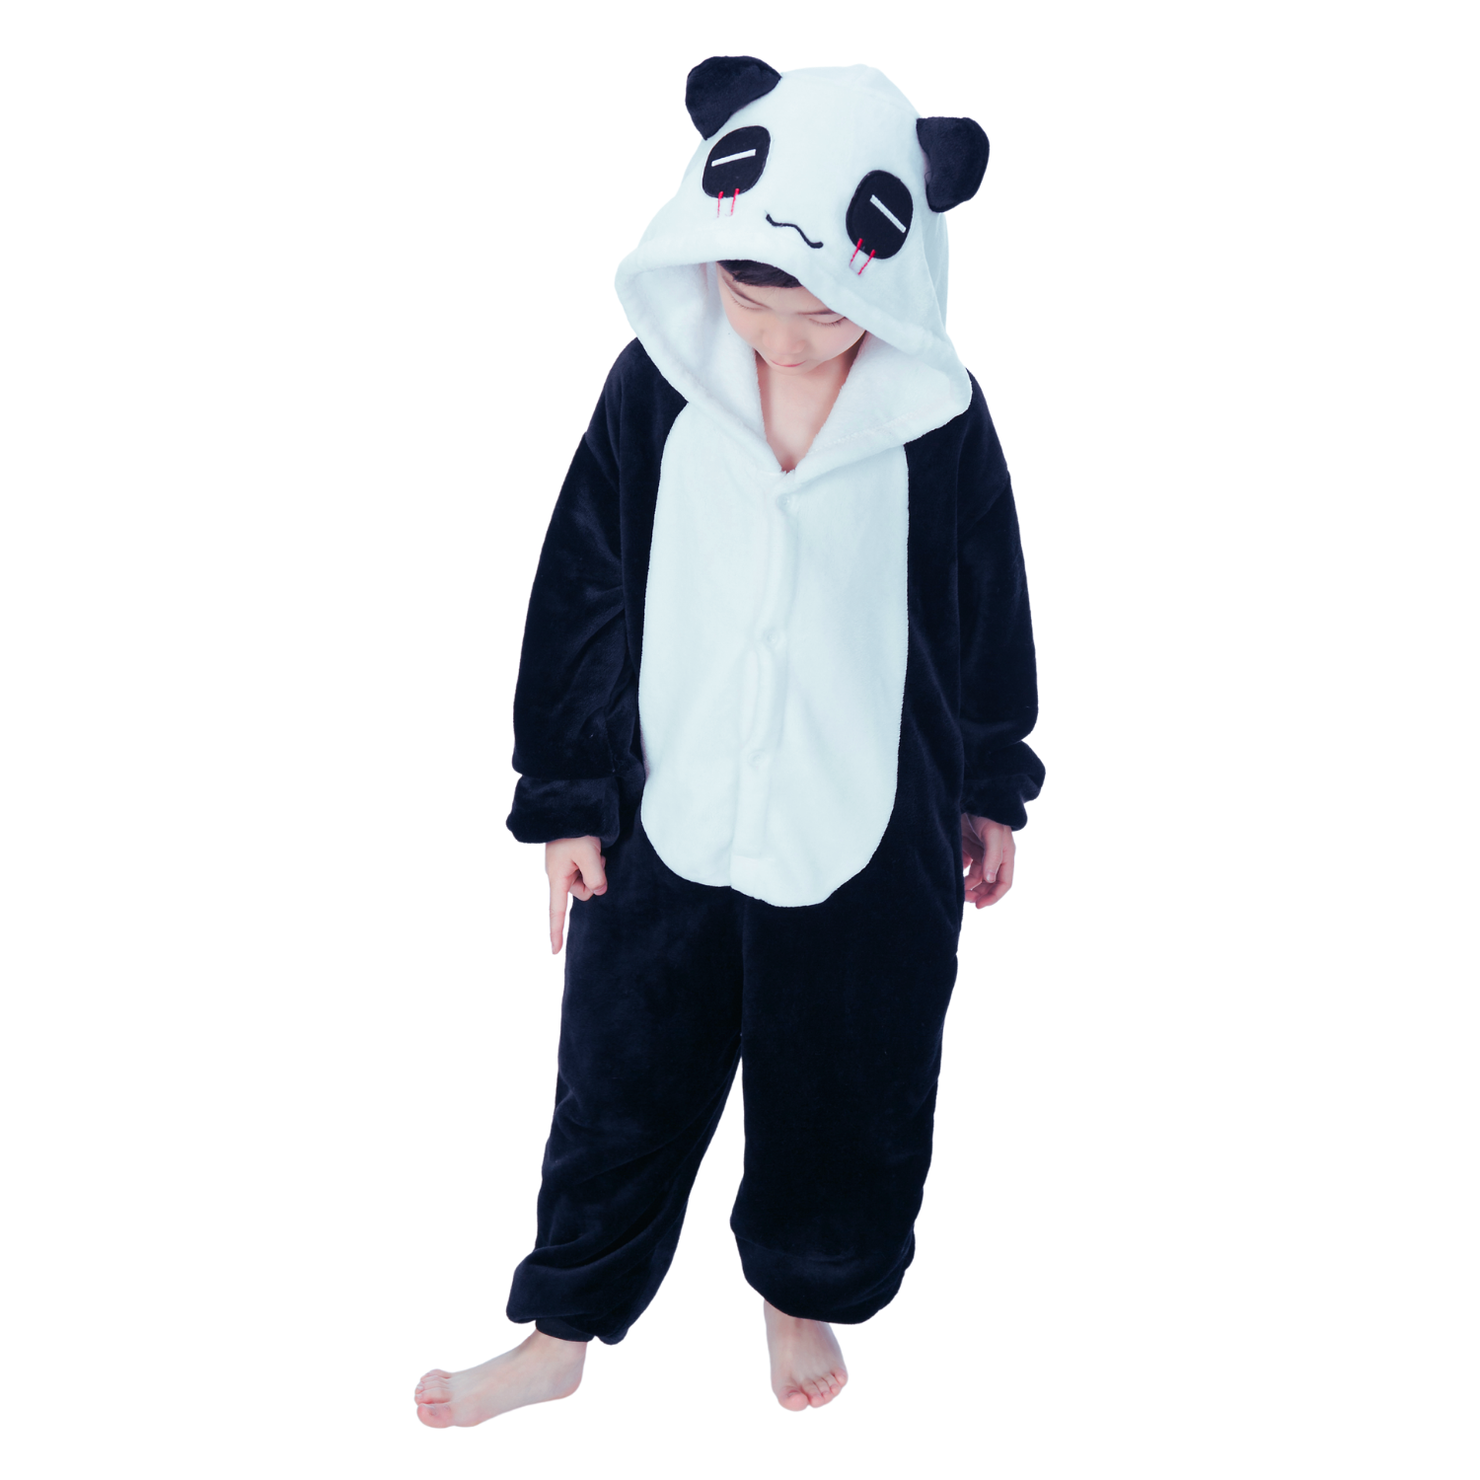 Pijama Enterito Unisex Oso Panda - Ropa Interior |